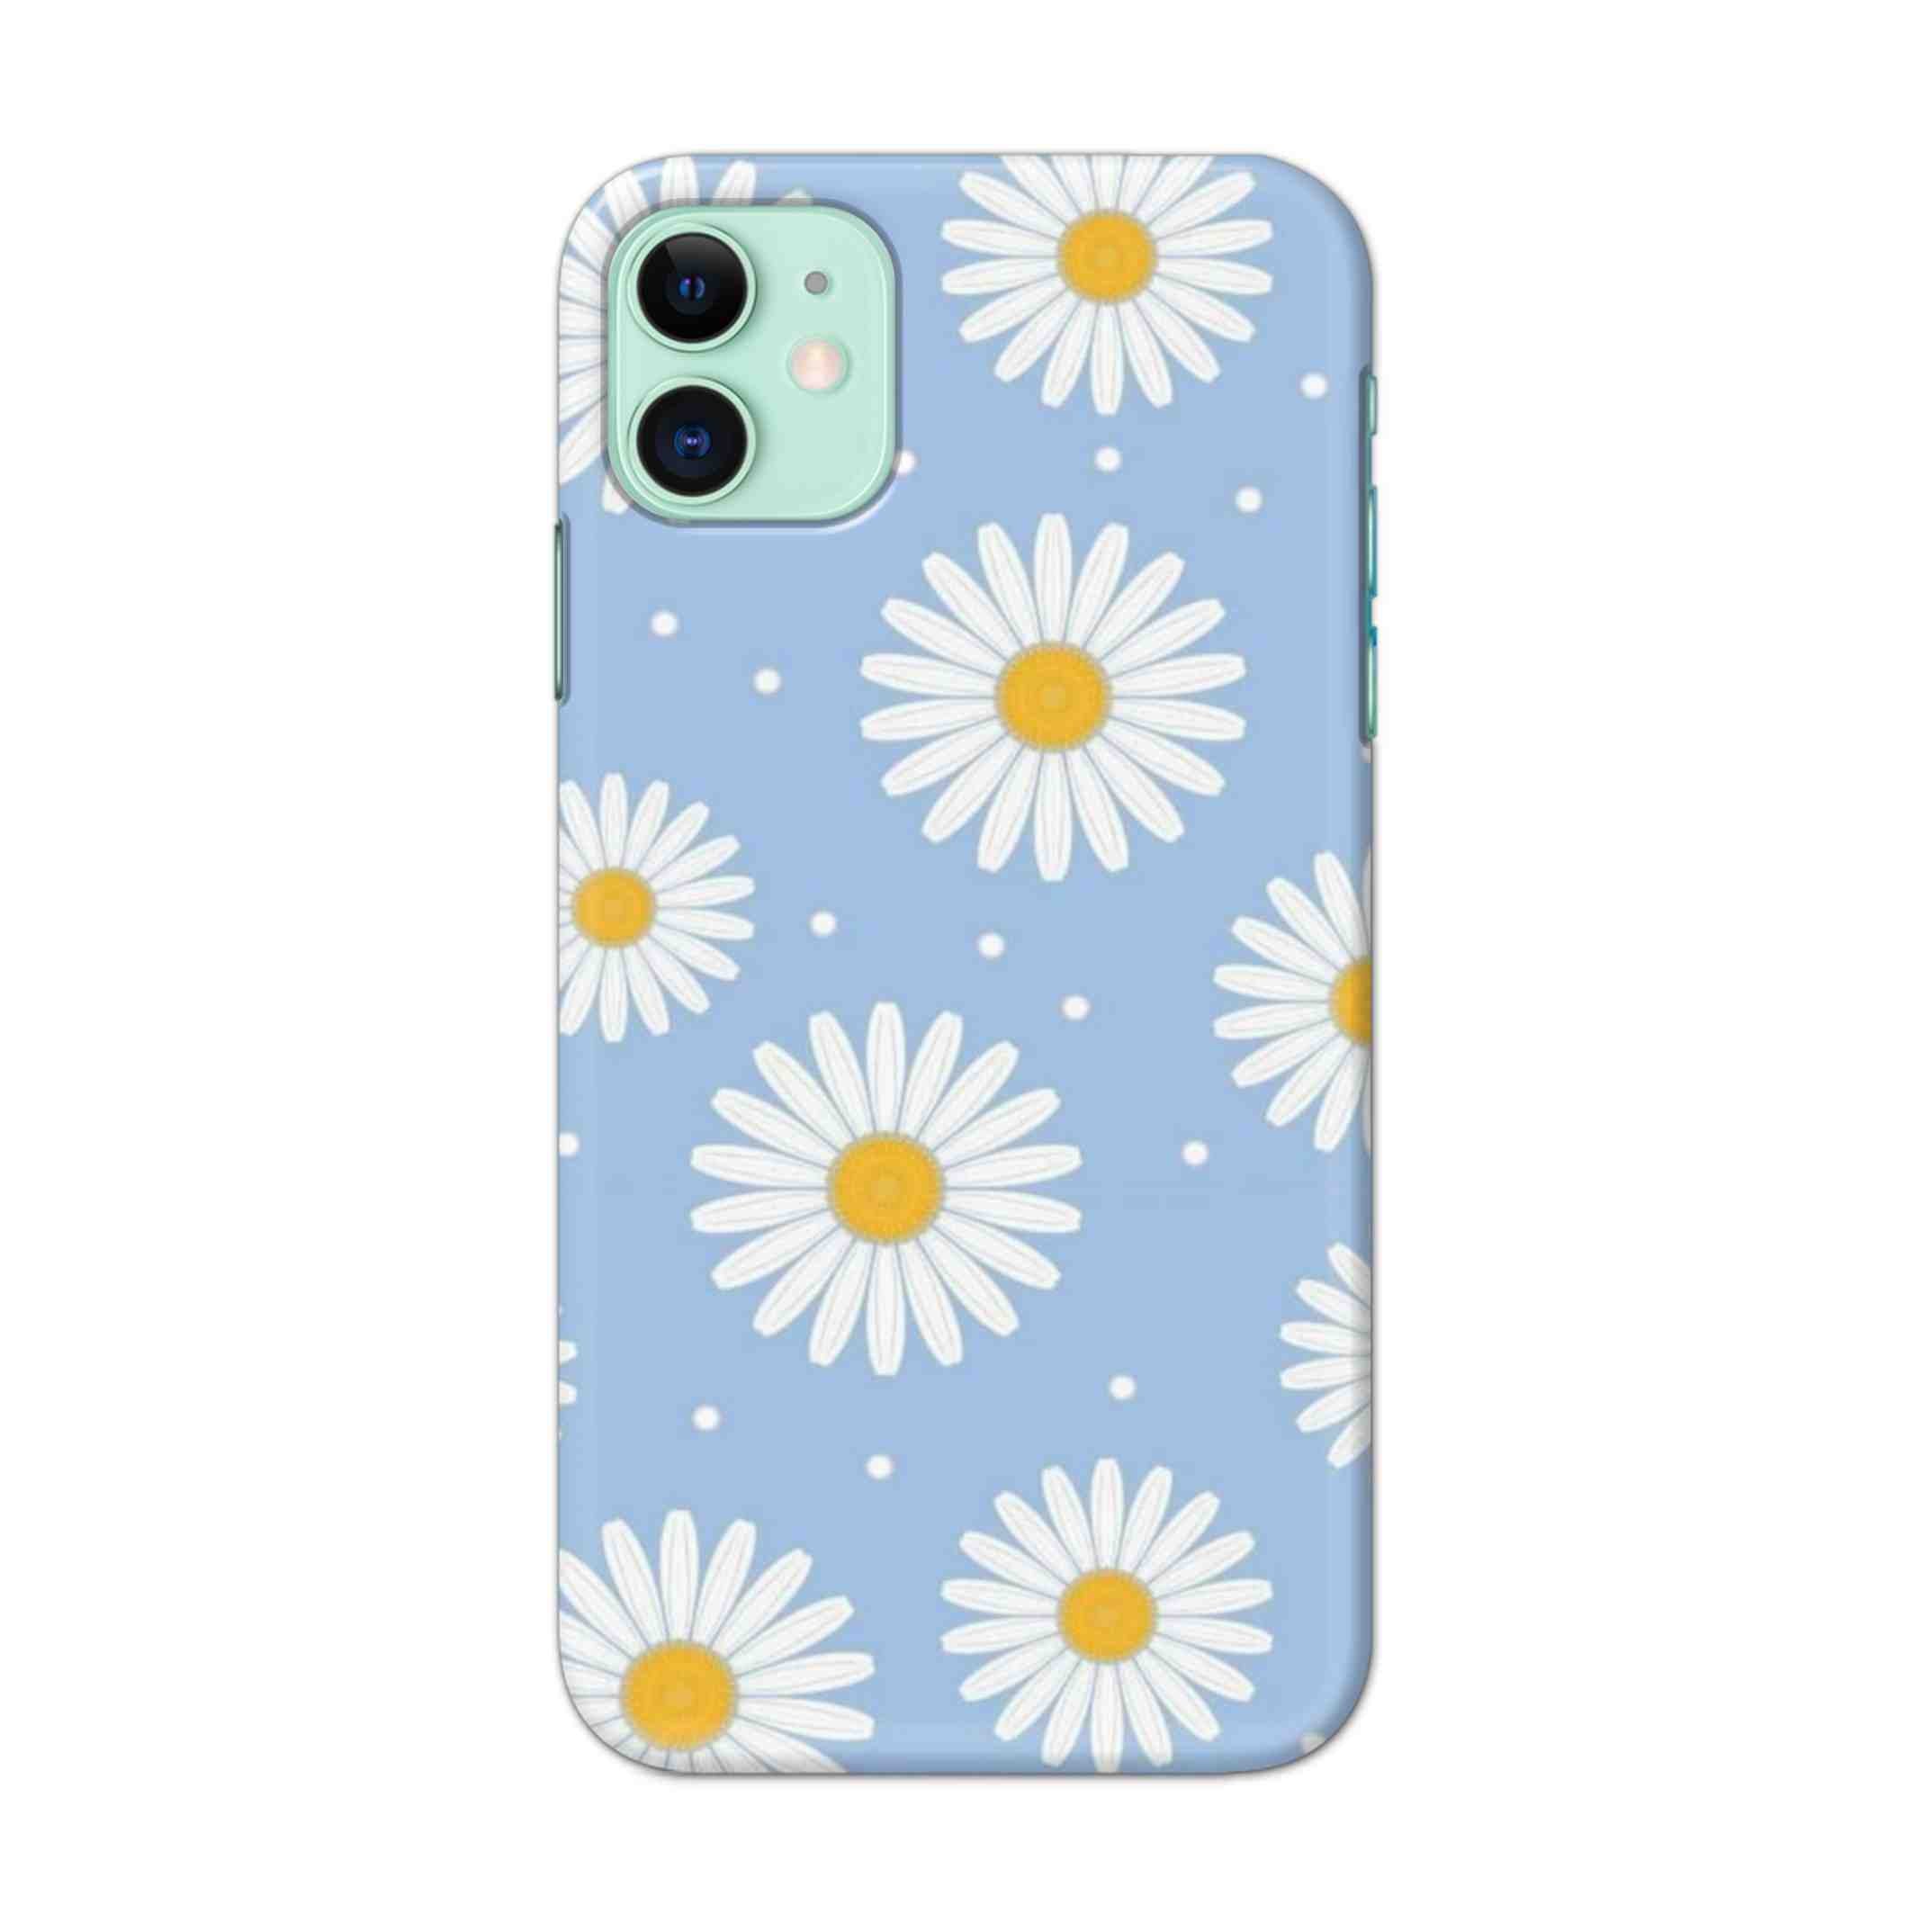 Buy White Sunflower Hard Back Mobile Phone Case Cover For iPhone 11 Online